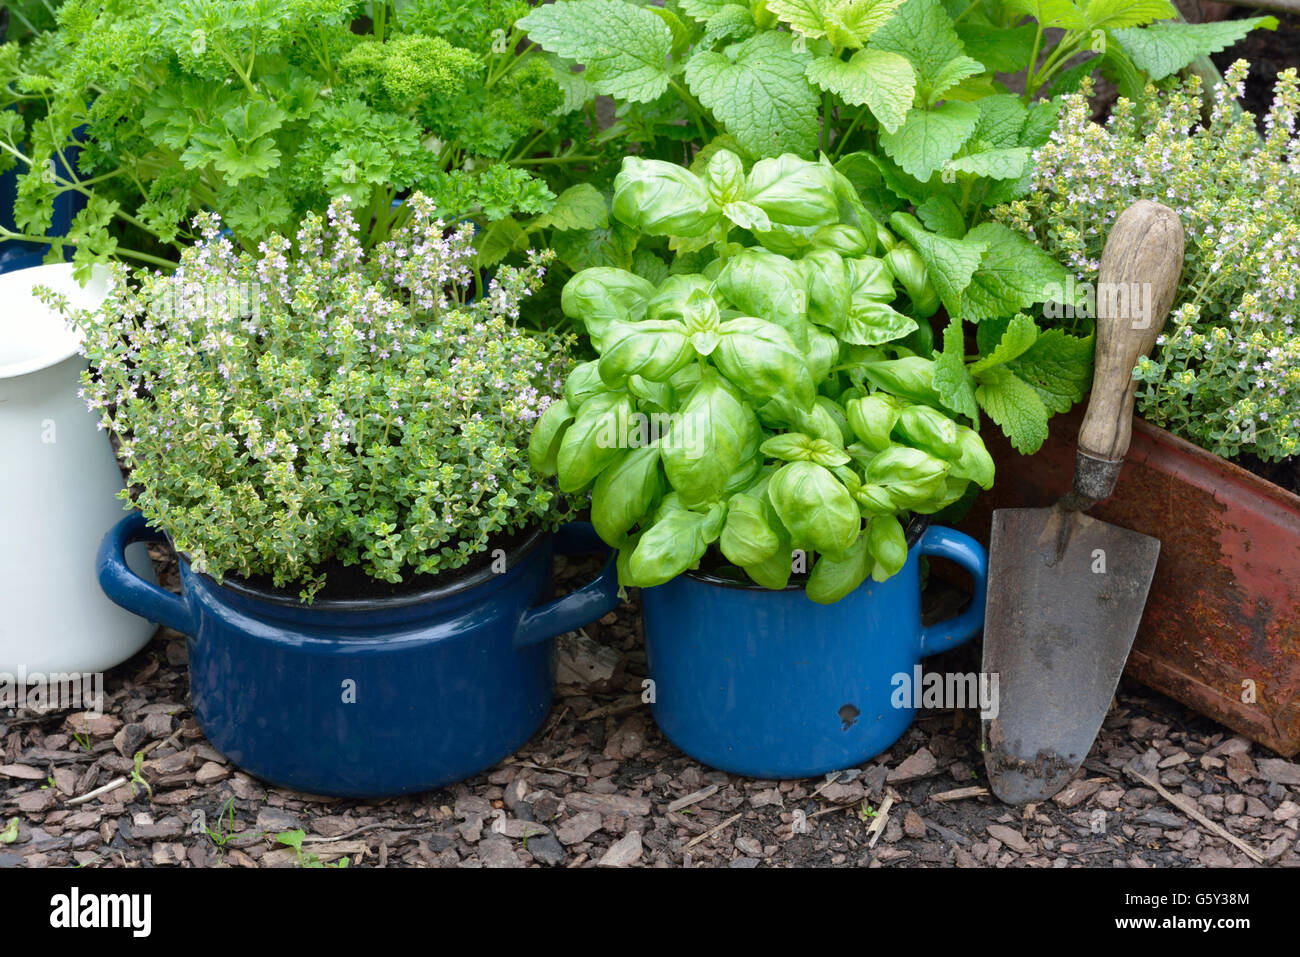 Different herbs in old bowls and cups, parsley, basil, thyme, garden cress / (Lepidium sativum), (Thymus vulgaris), (Ocimum basilicum), (Petroselinum crispum) Stock Photo